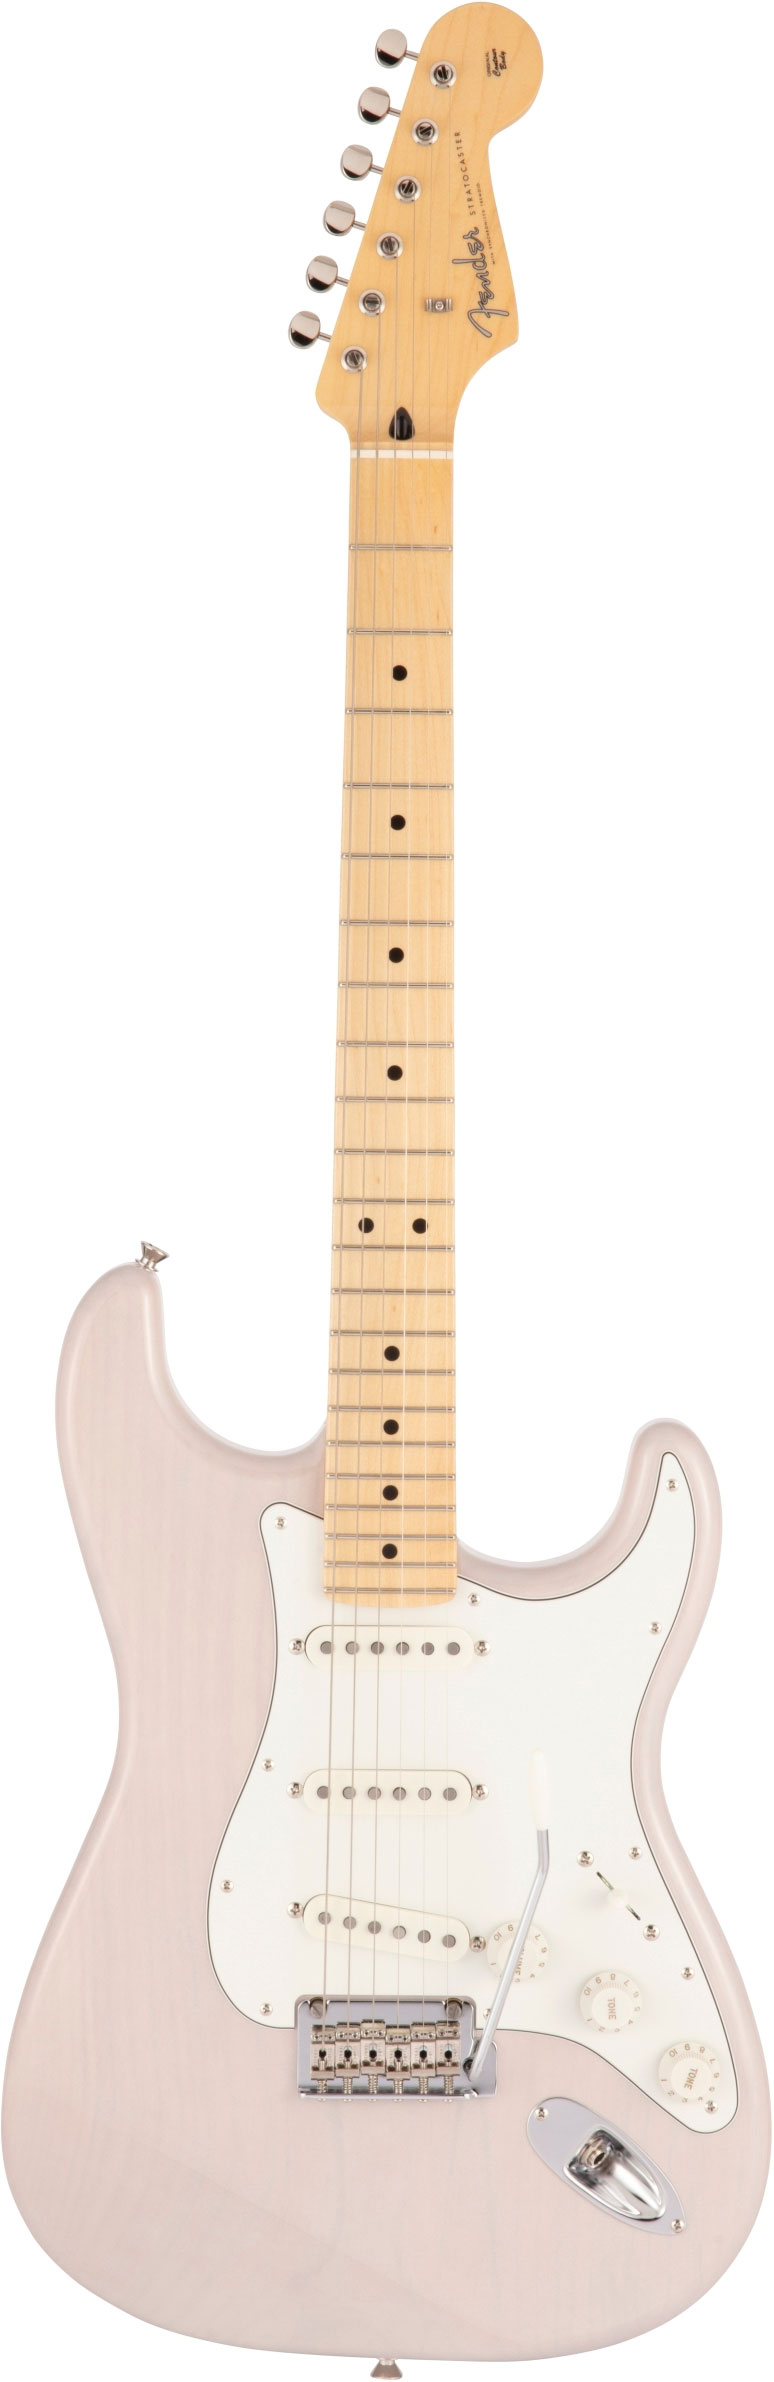 Fender Made in Japan Hybrid II Stratocaster US Blonde Maple